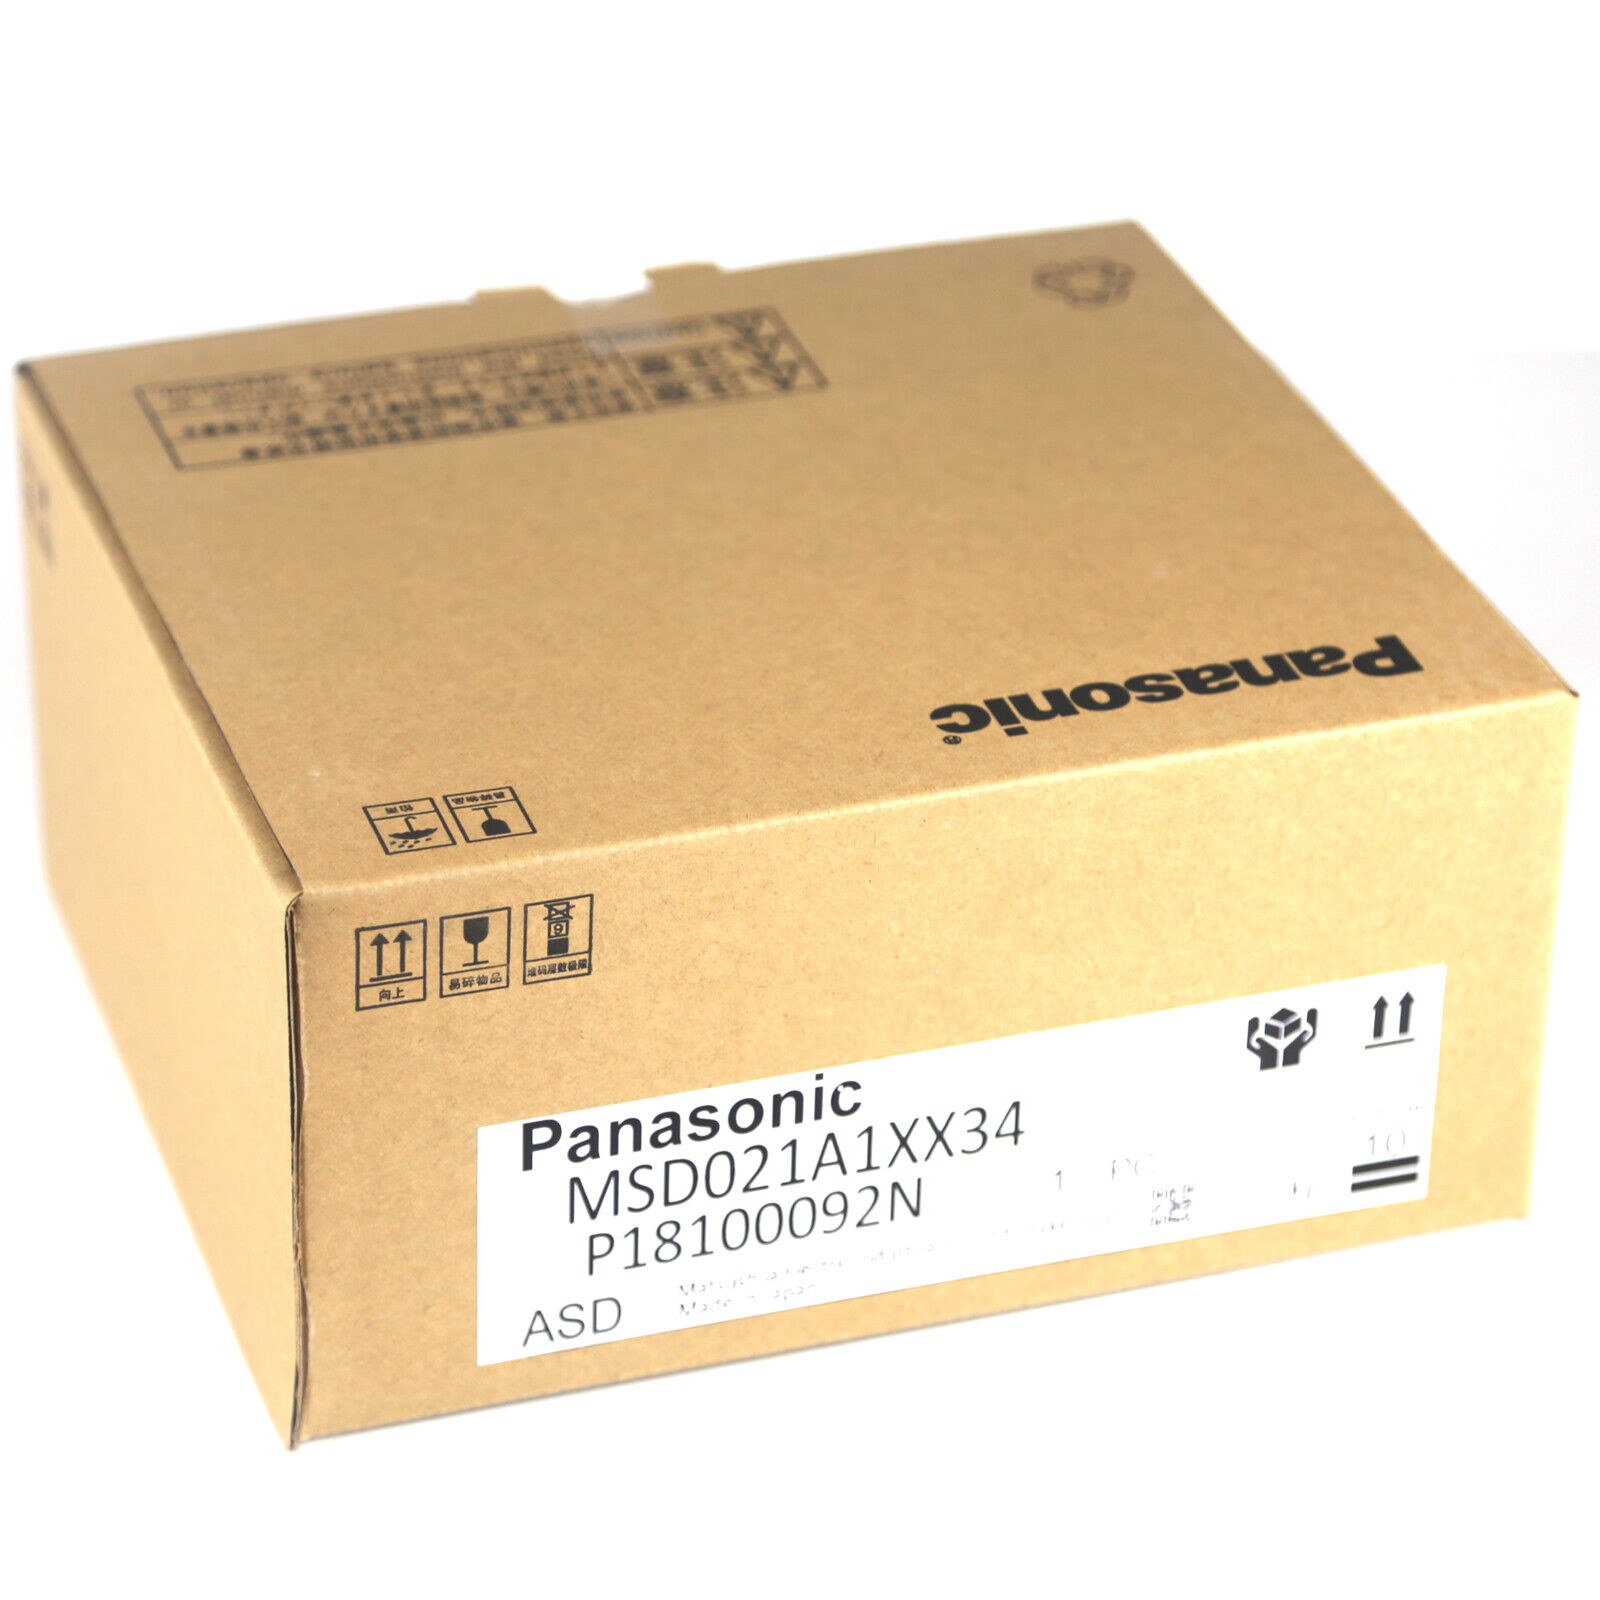 1PC Panasonic MSD021A1XX34 Servo Driver MSD021A1XX34 New Fast Shipping